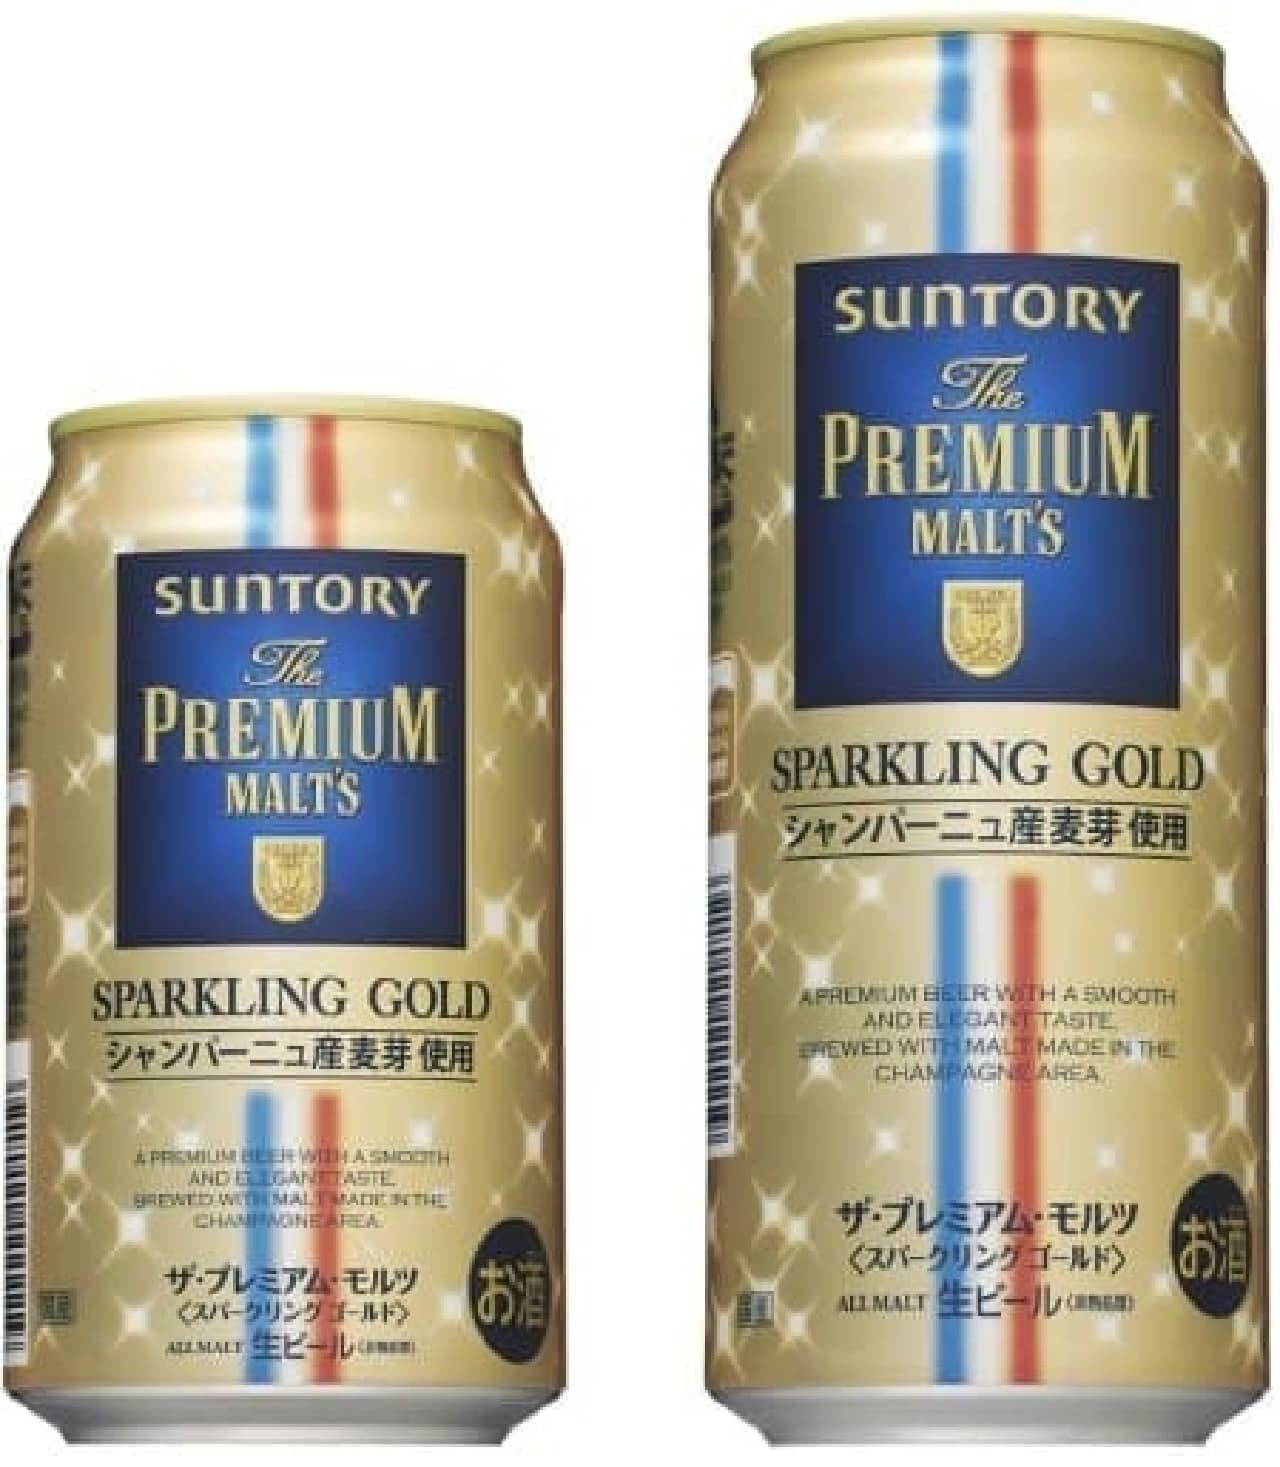 7-ELEVEN & i Group Limited "The Premium Malt's [Sparkling Gold]"